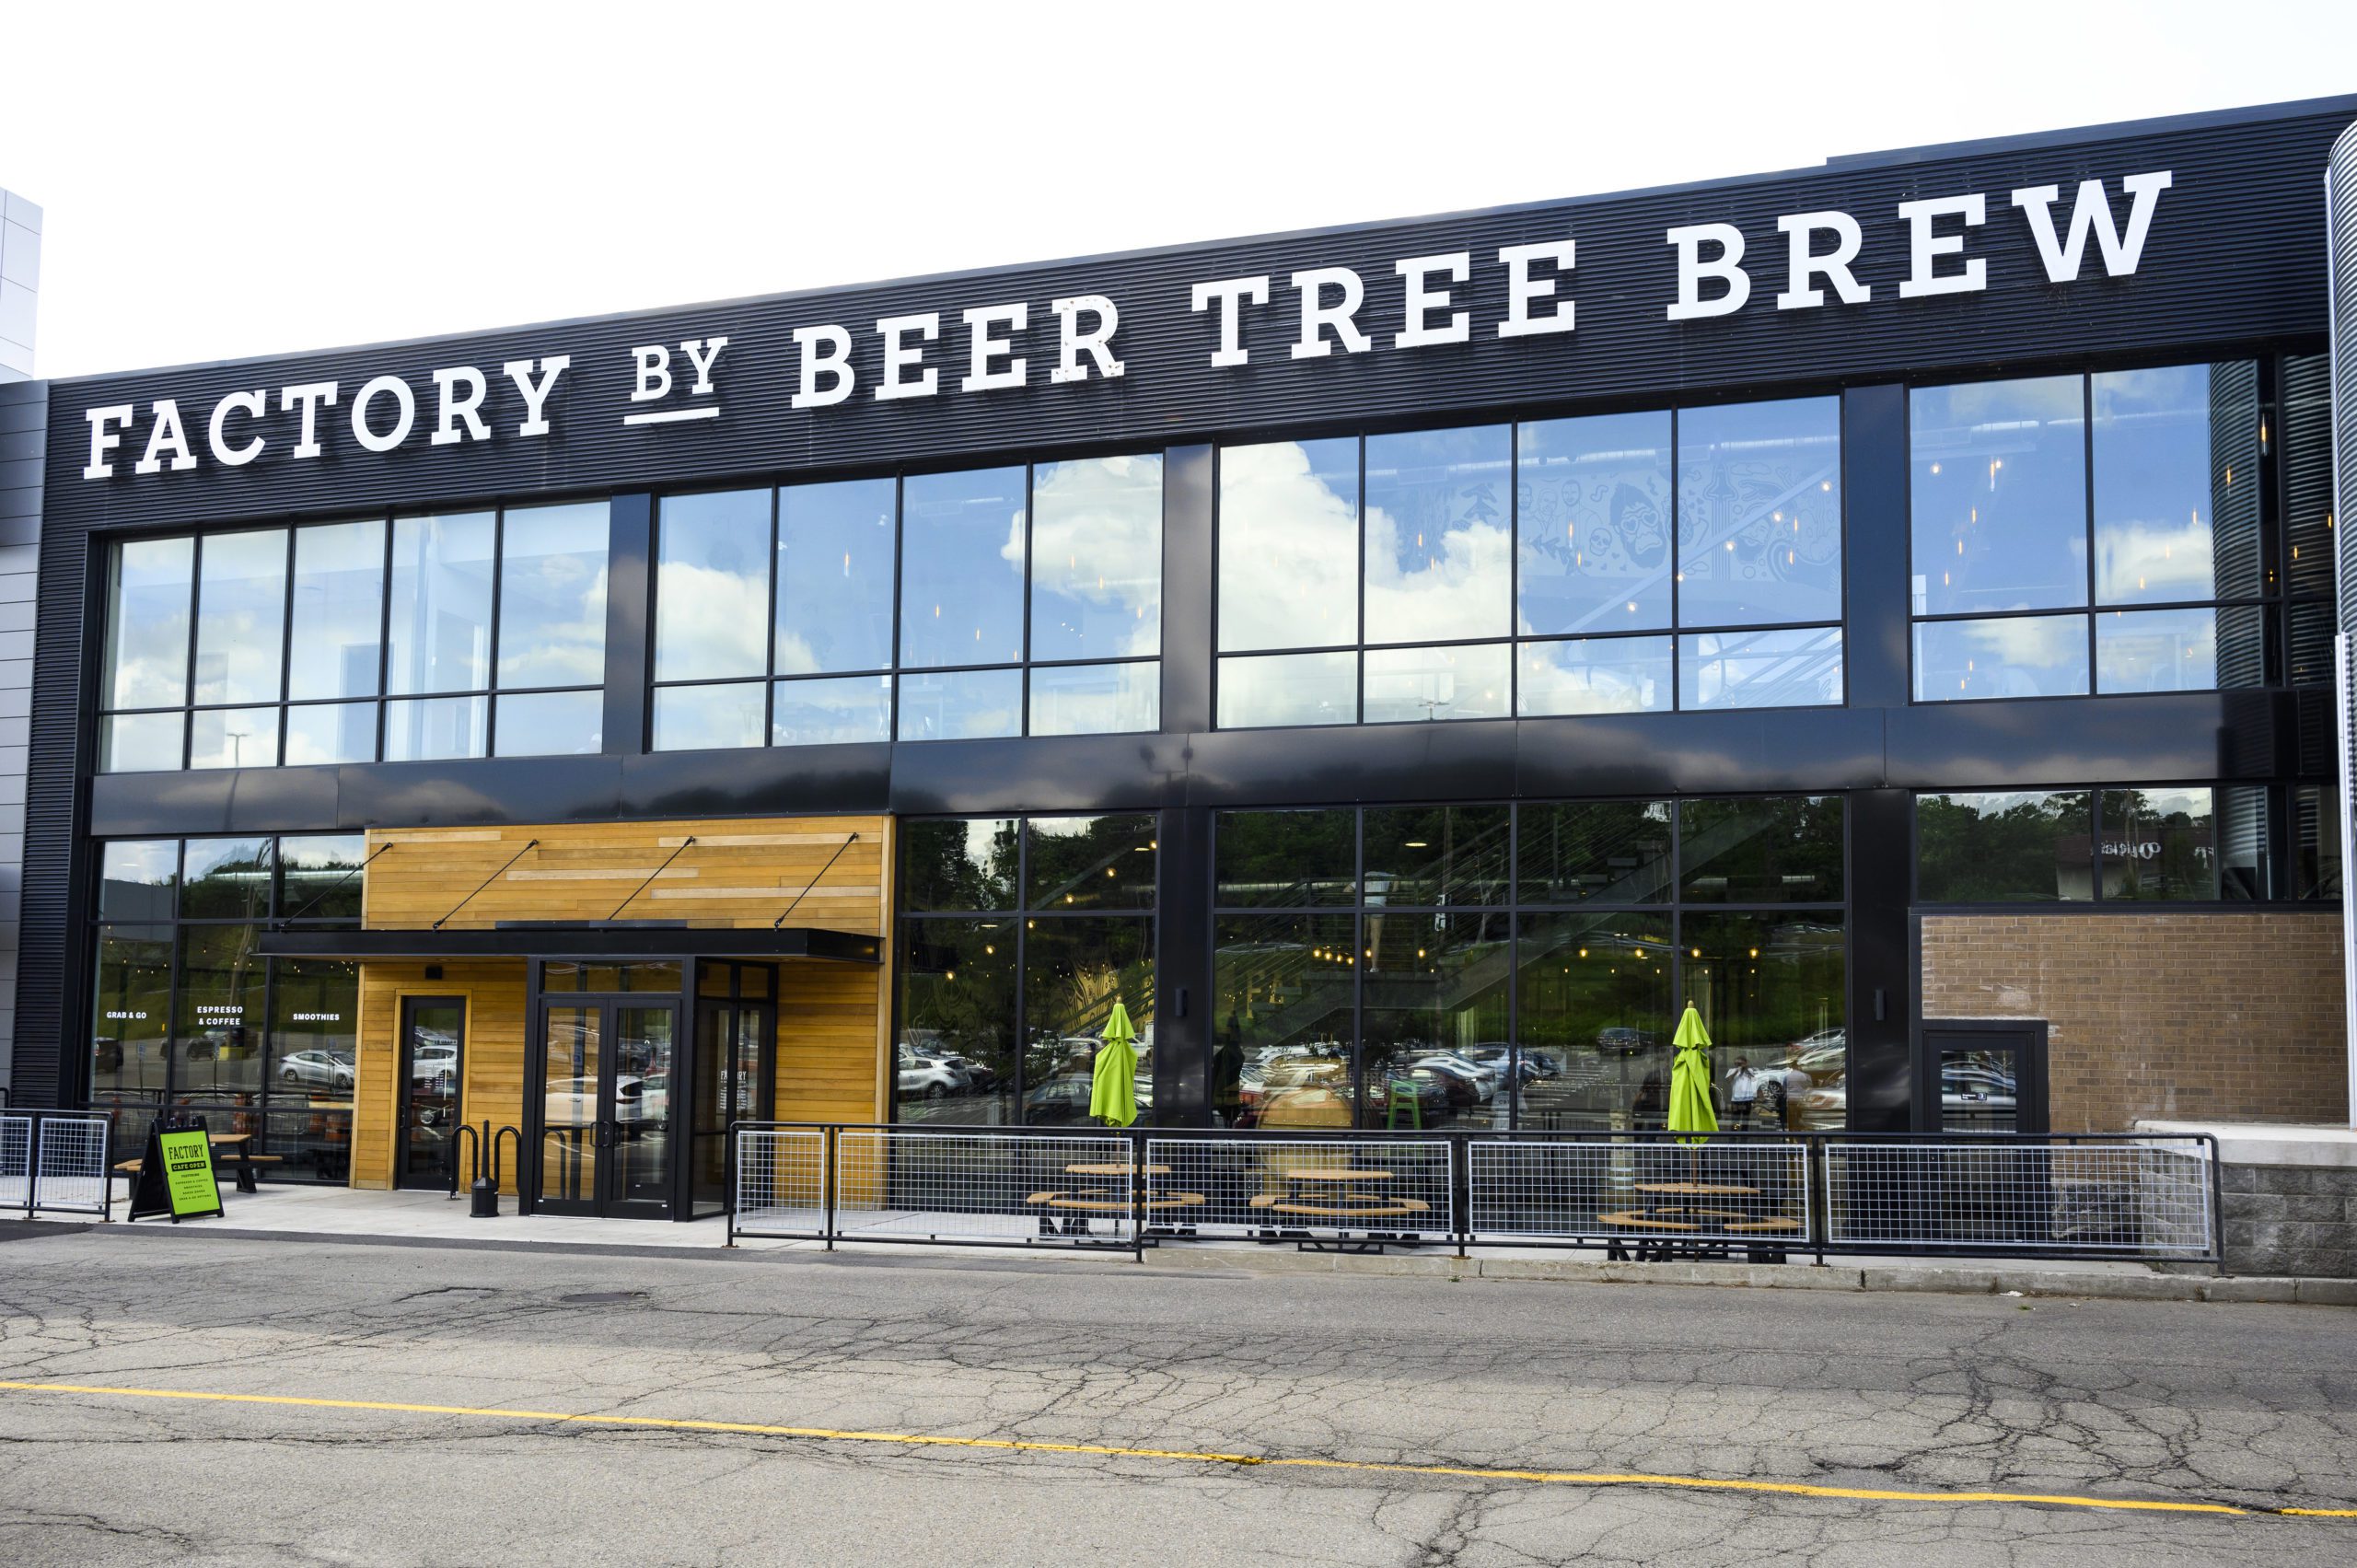 Beer Tree Brew Co.